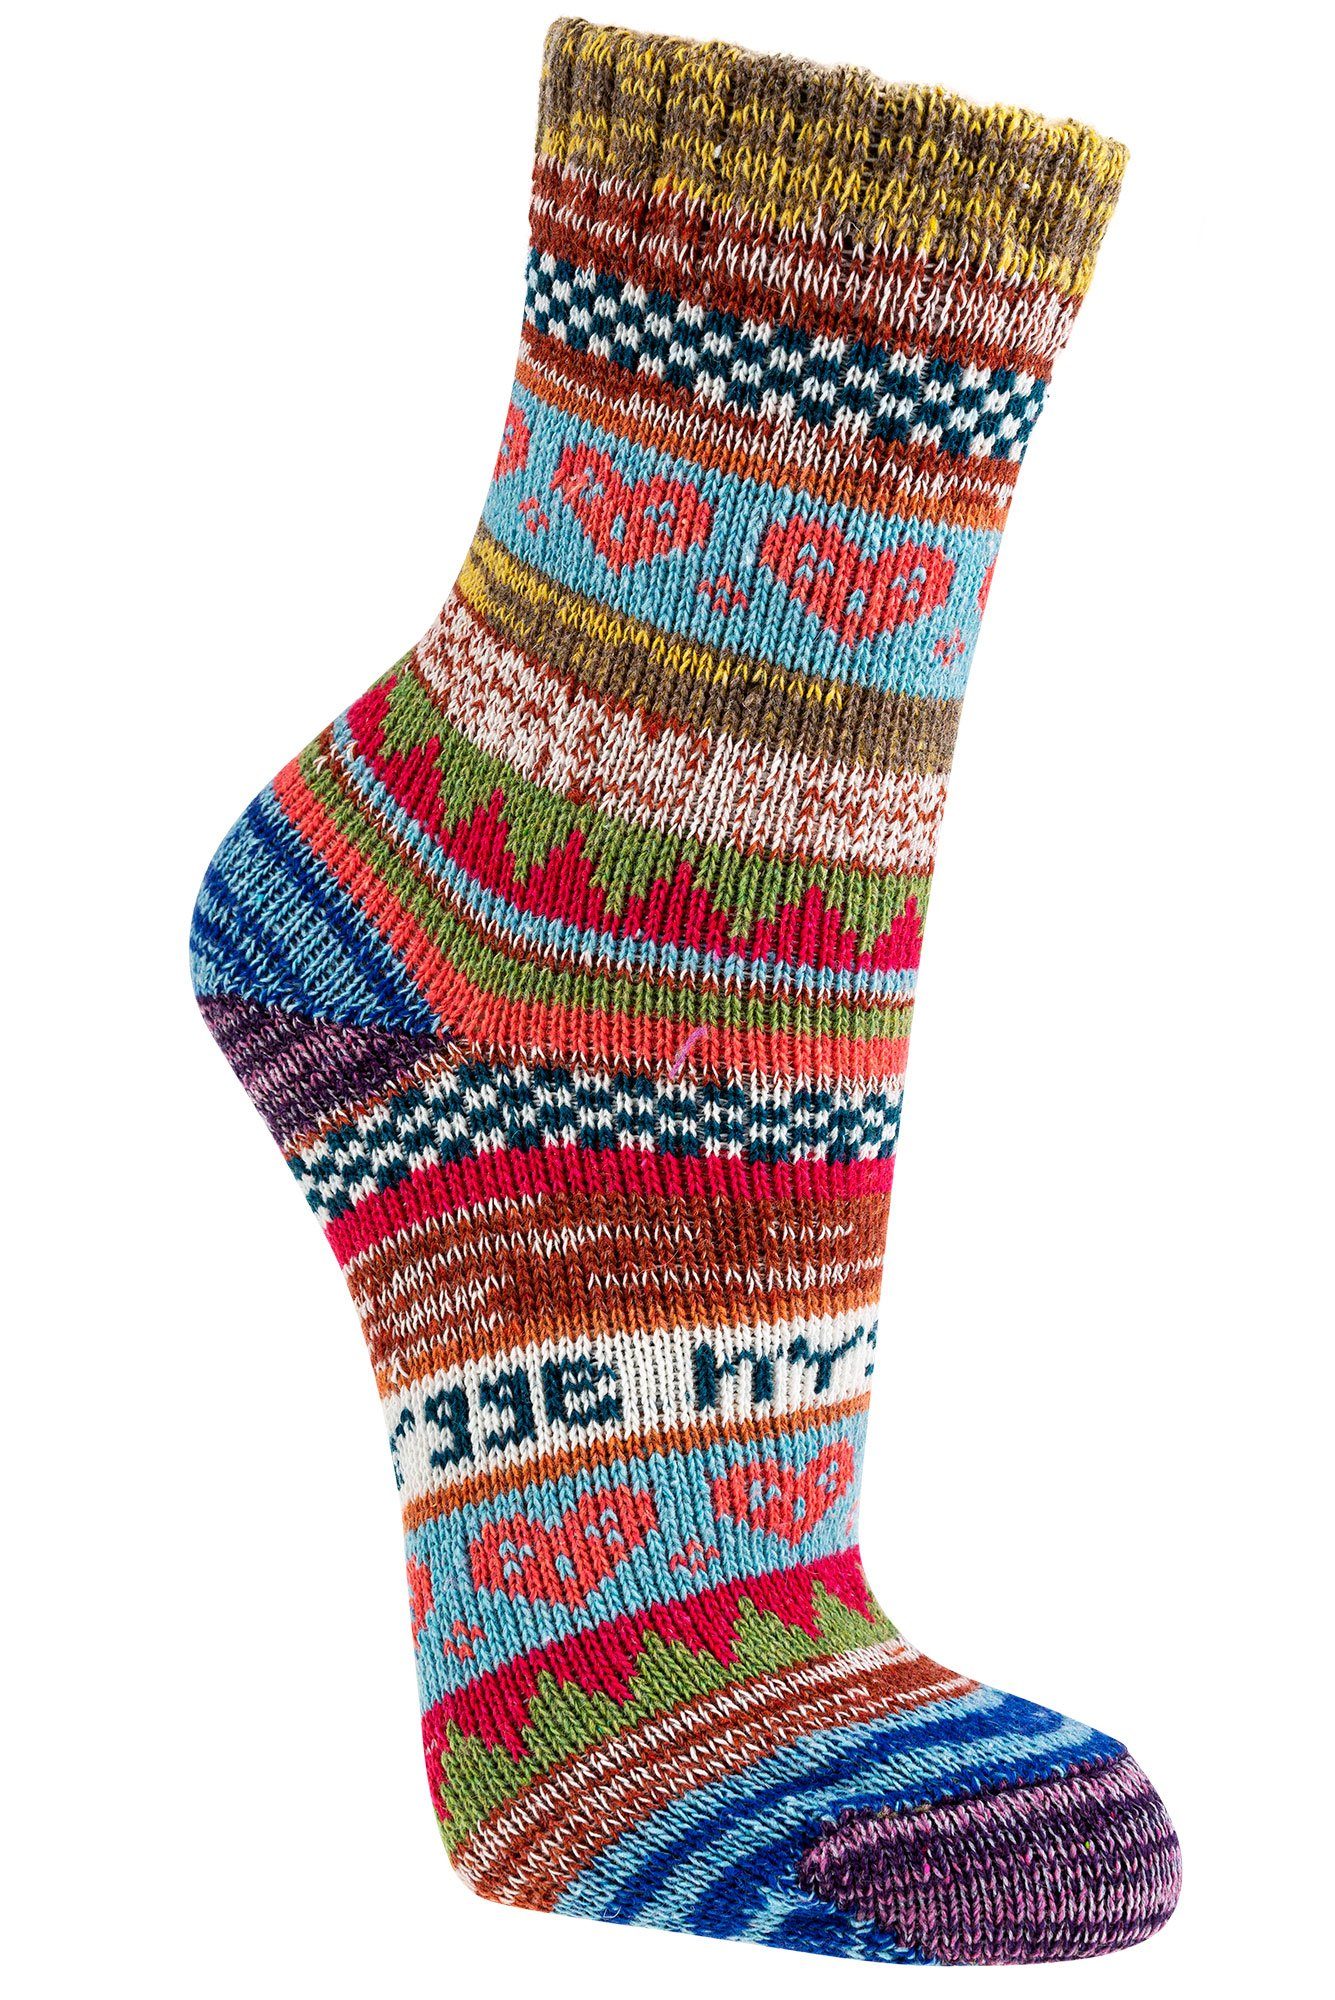 Norweger 4 Socks mit Socken Baumwolle Fun mit Muster Hygge 90% Norwegersocken Bunte schönem